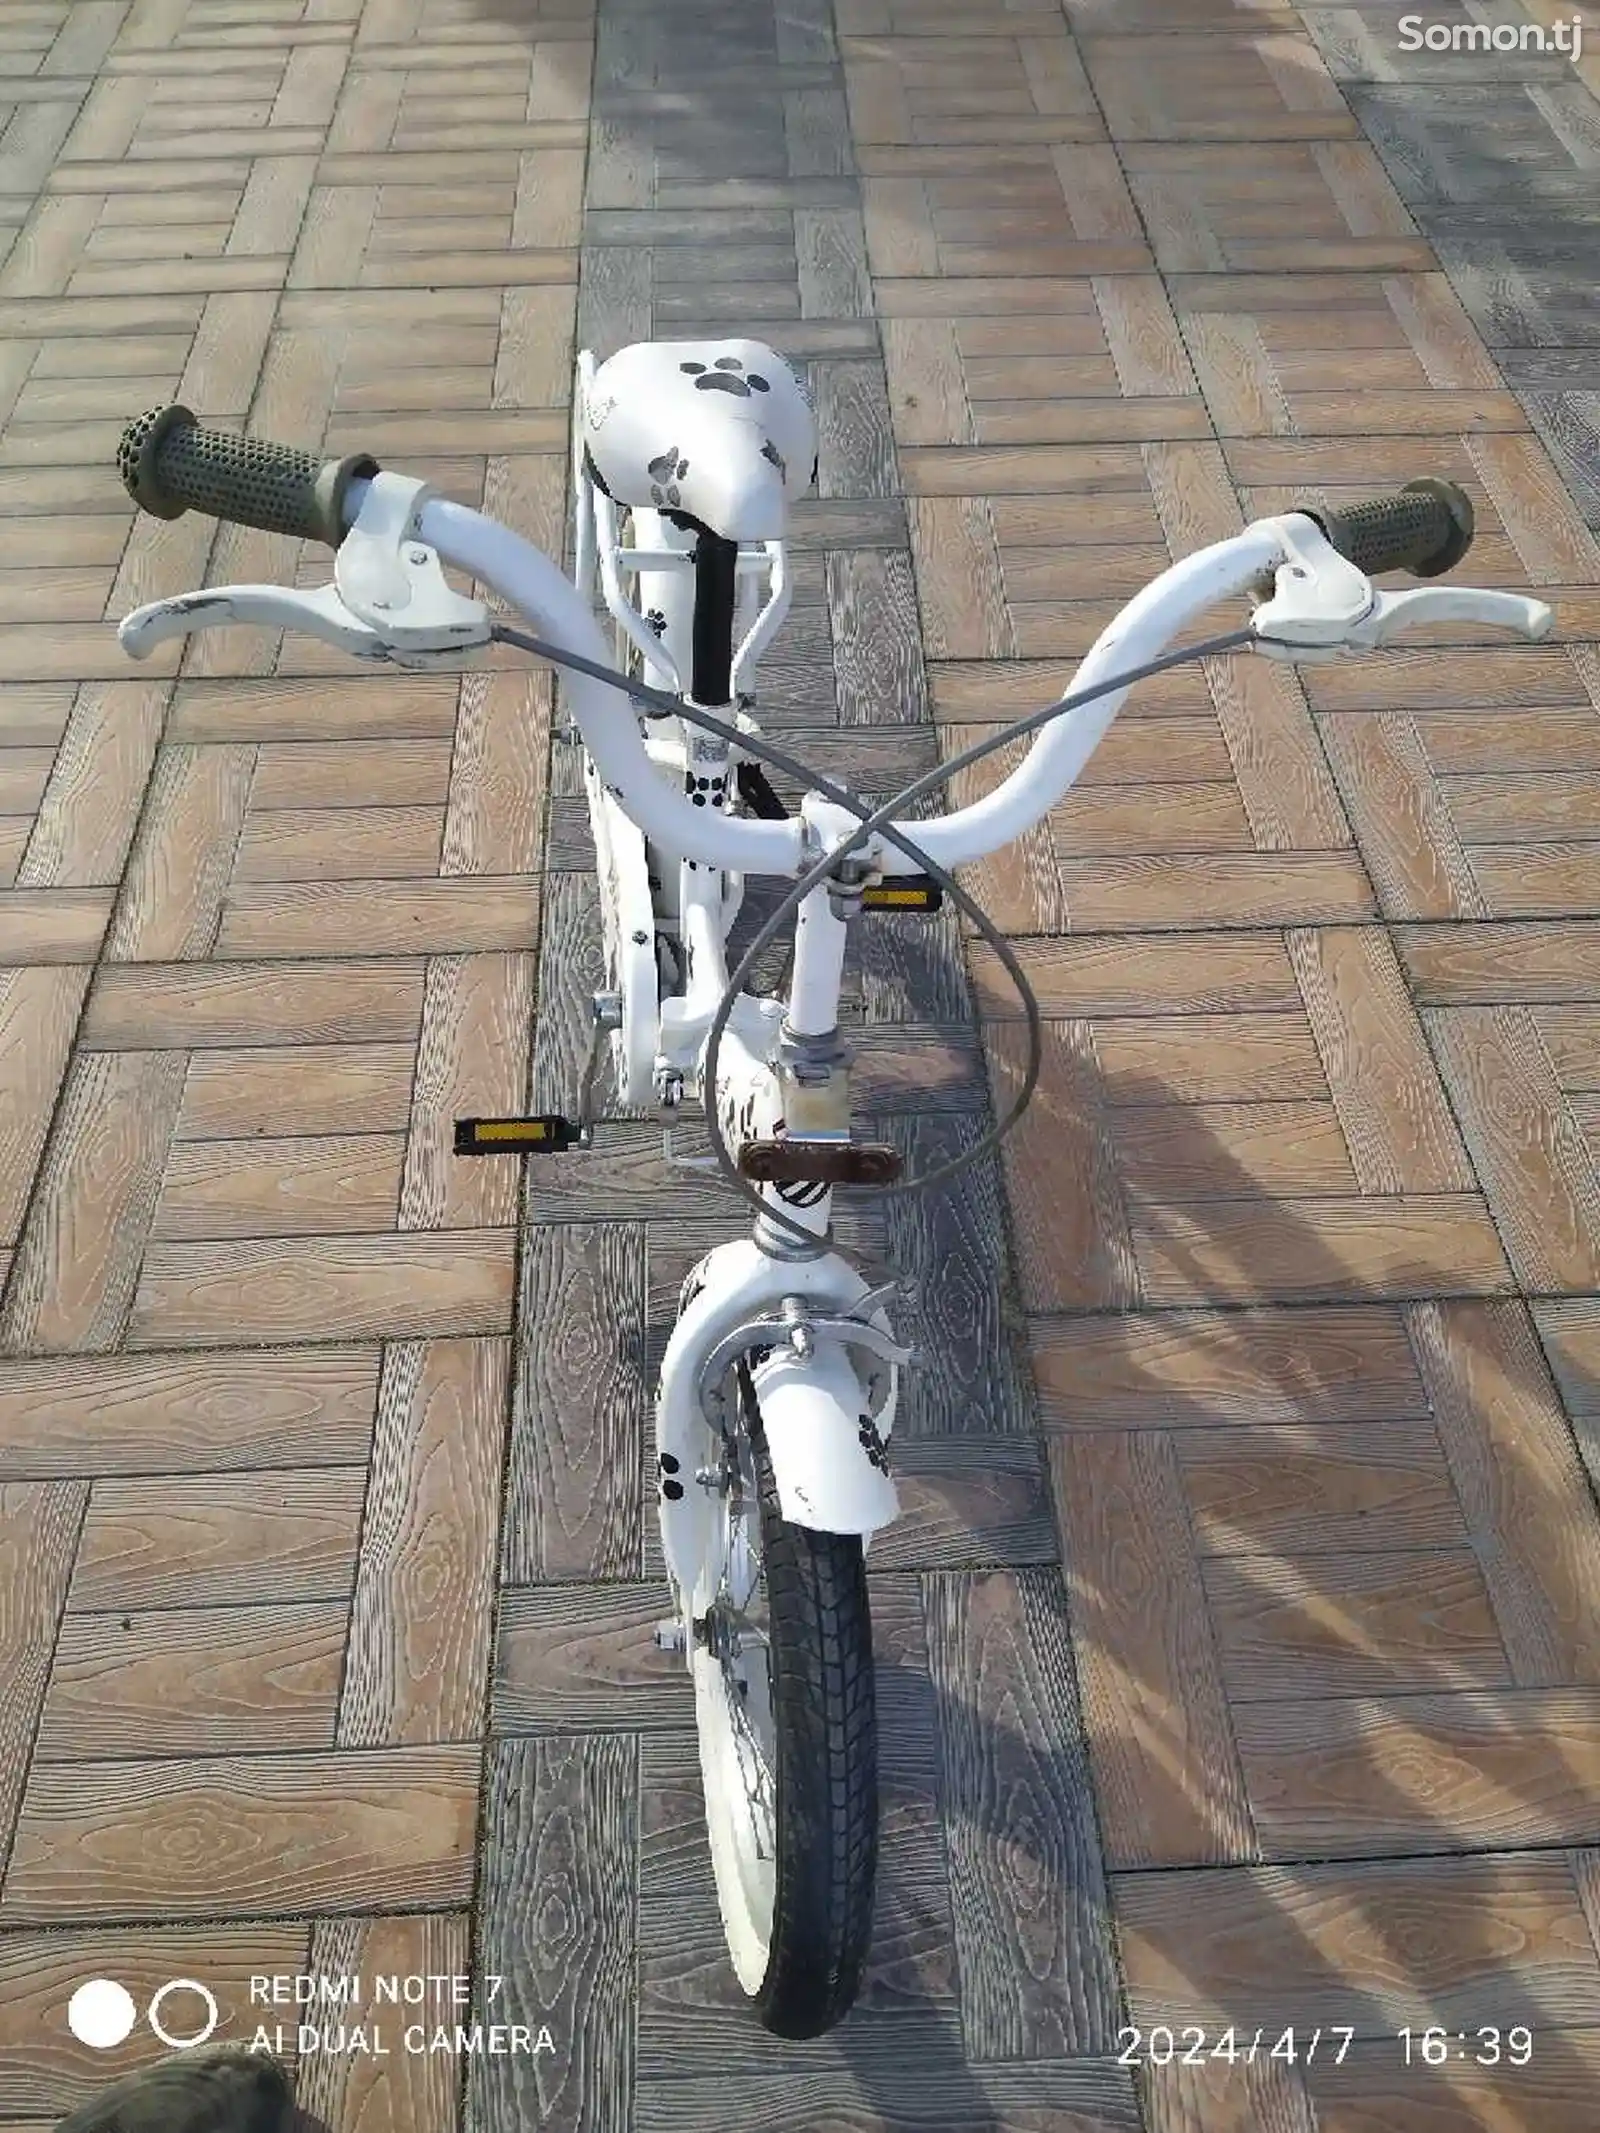 Велосипед корейский-10